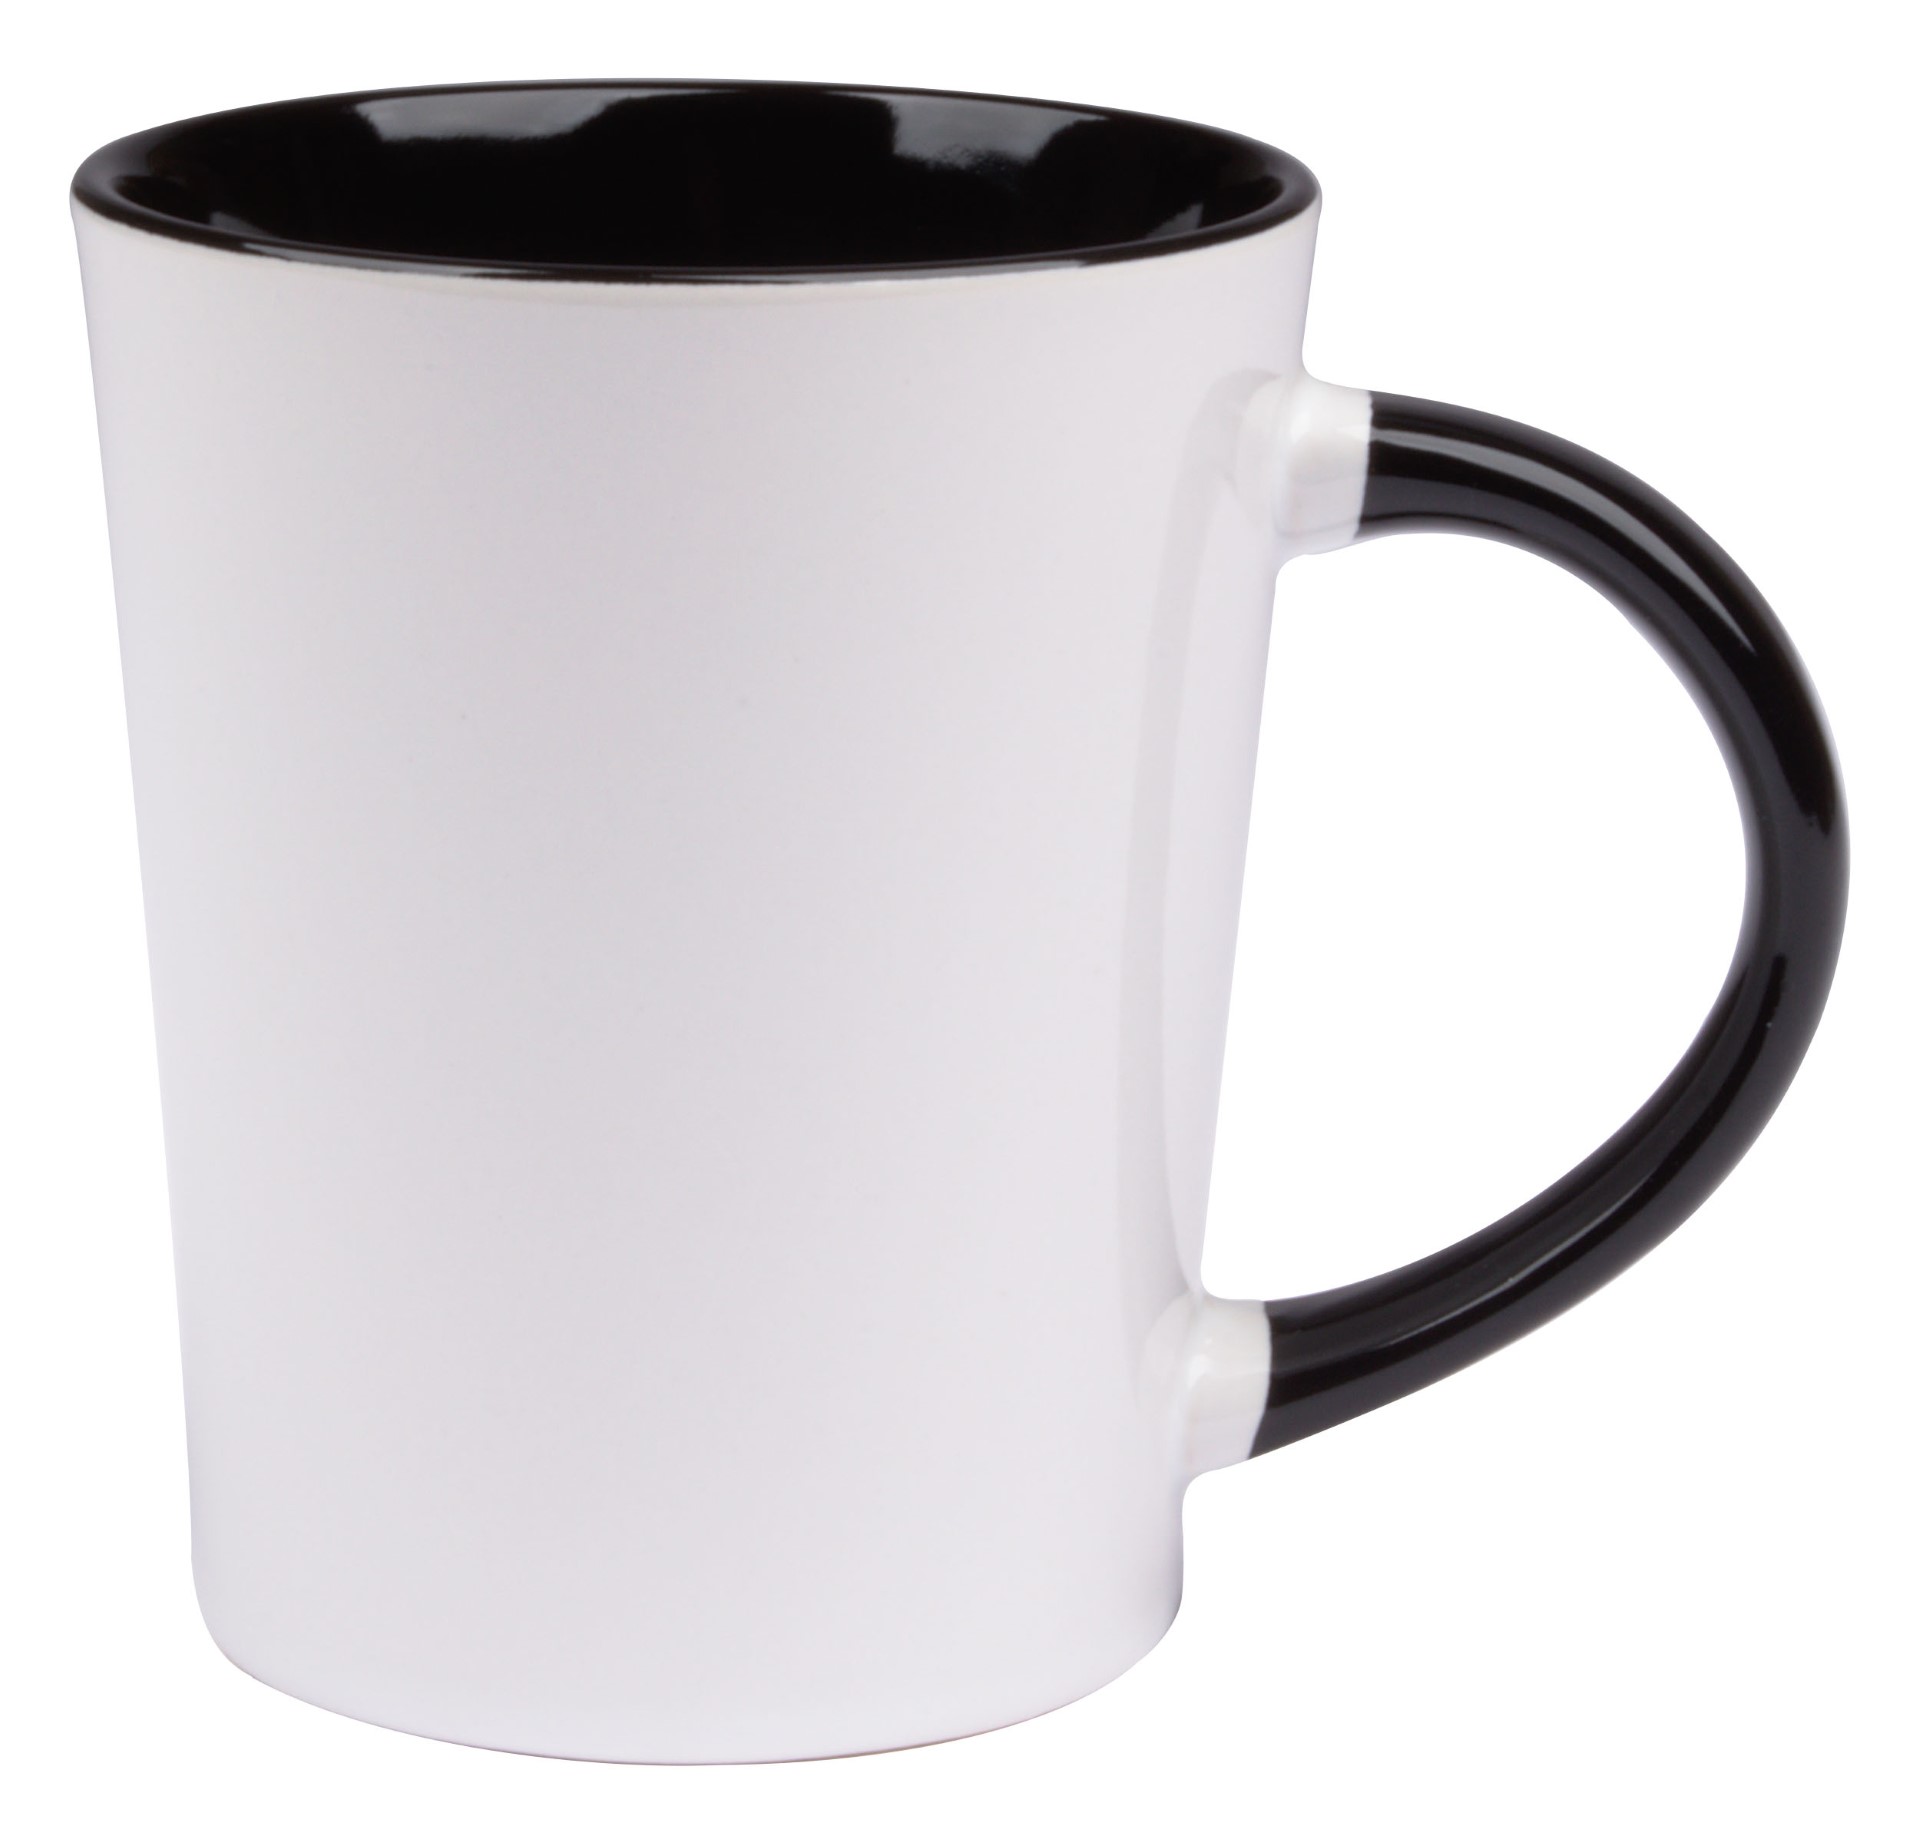 Diner Mug: 10oz Wholesale Ceramic Diner Mugs | CDI International